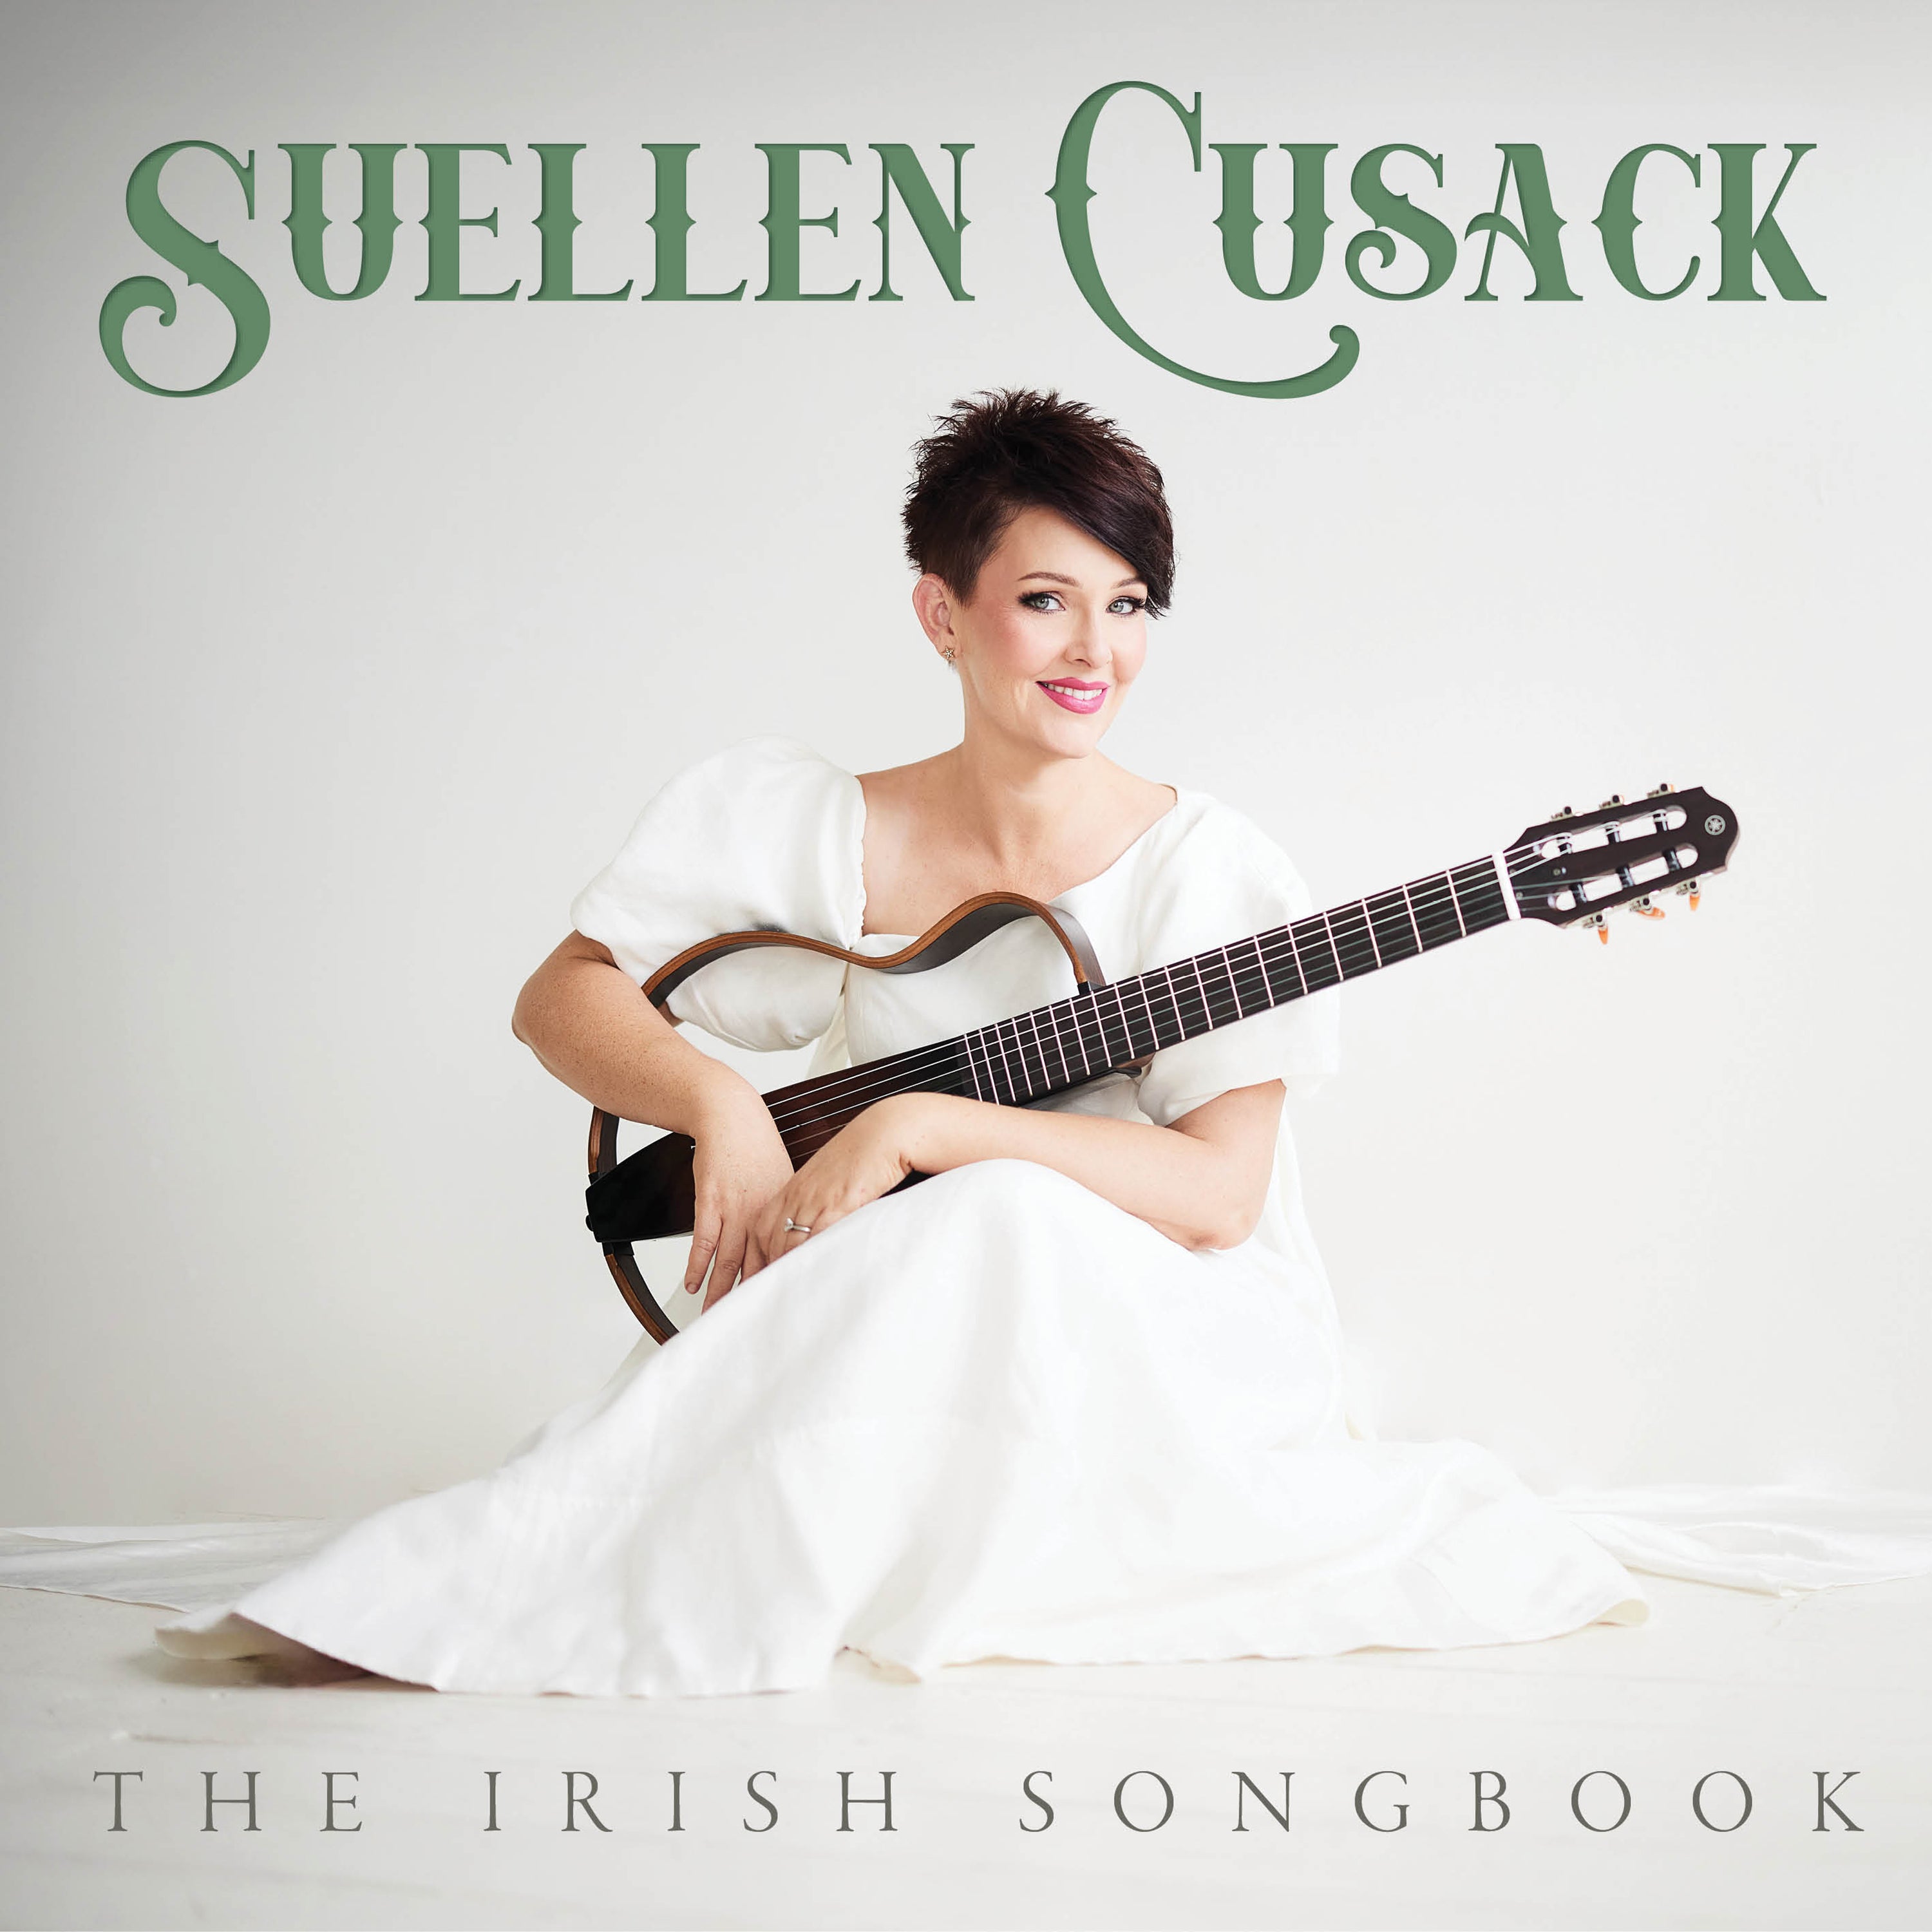 SUELLEN CUSACK - THE IRISH SONGBOOK (SIGNED CD)